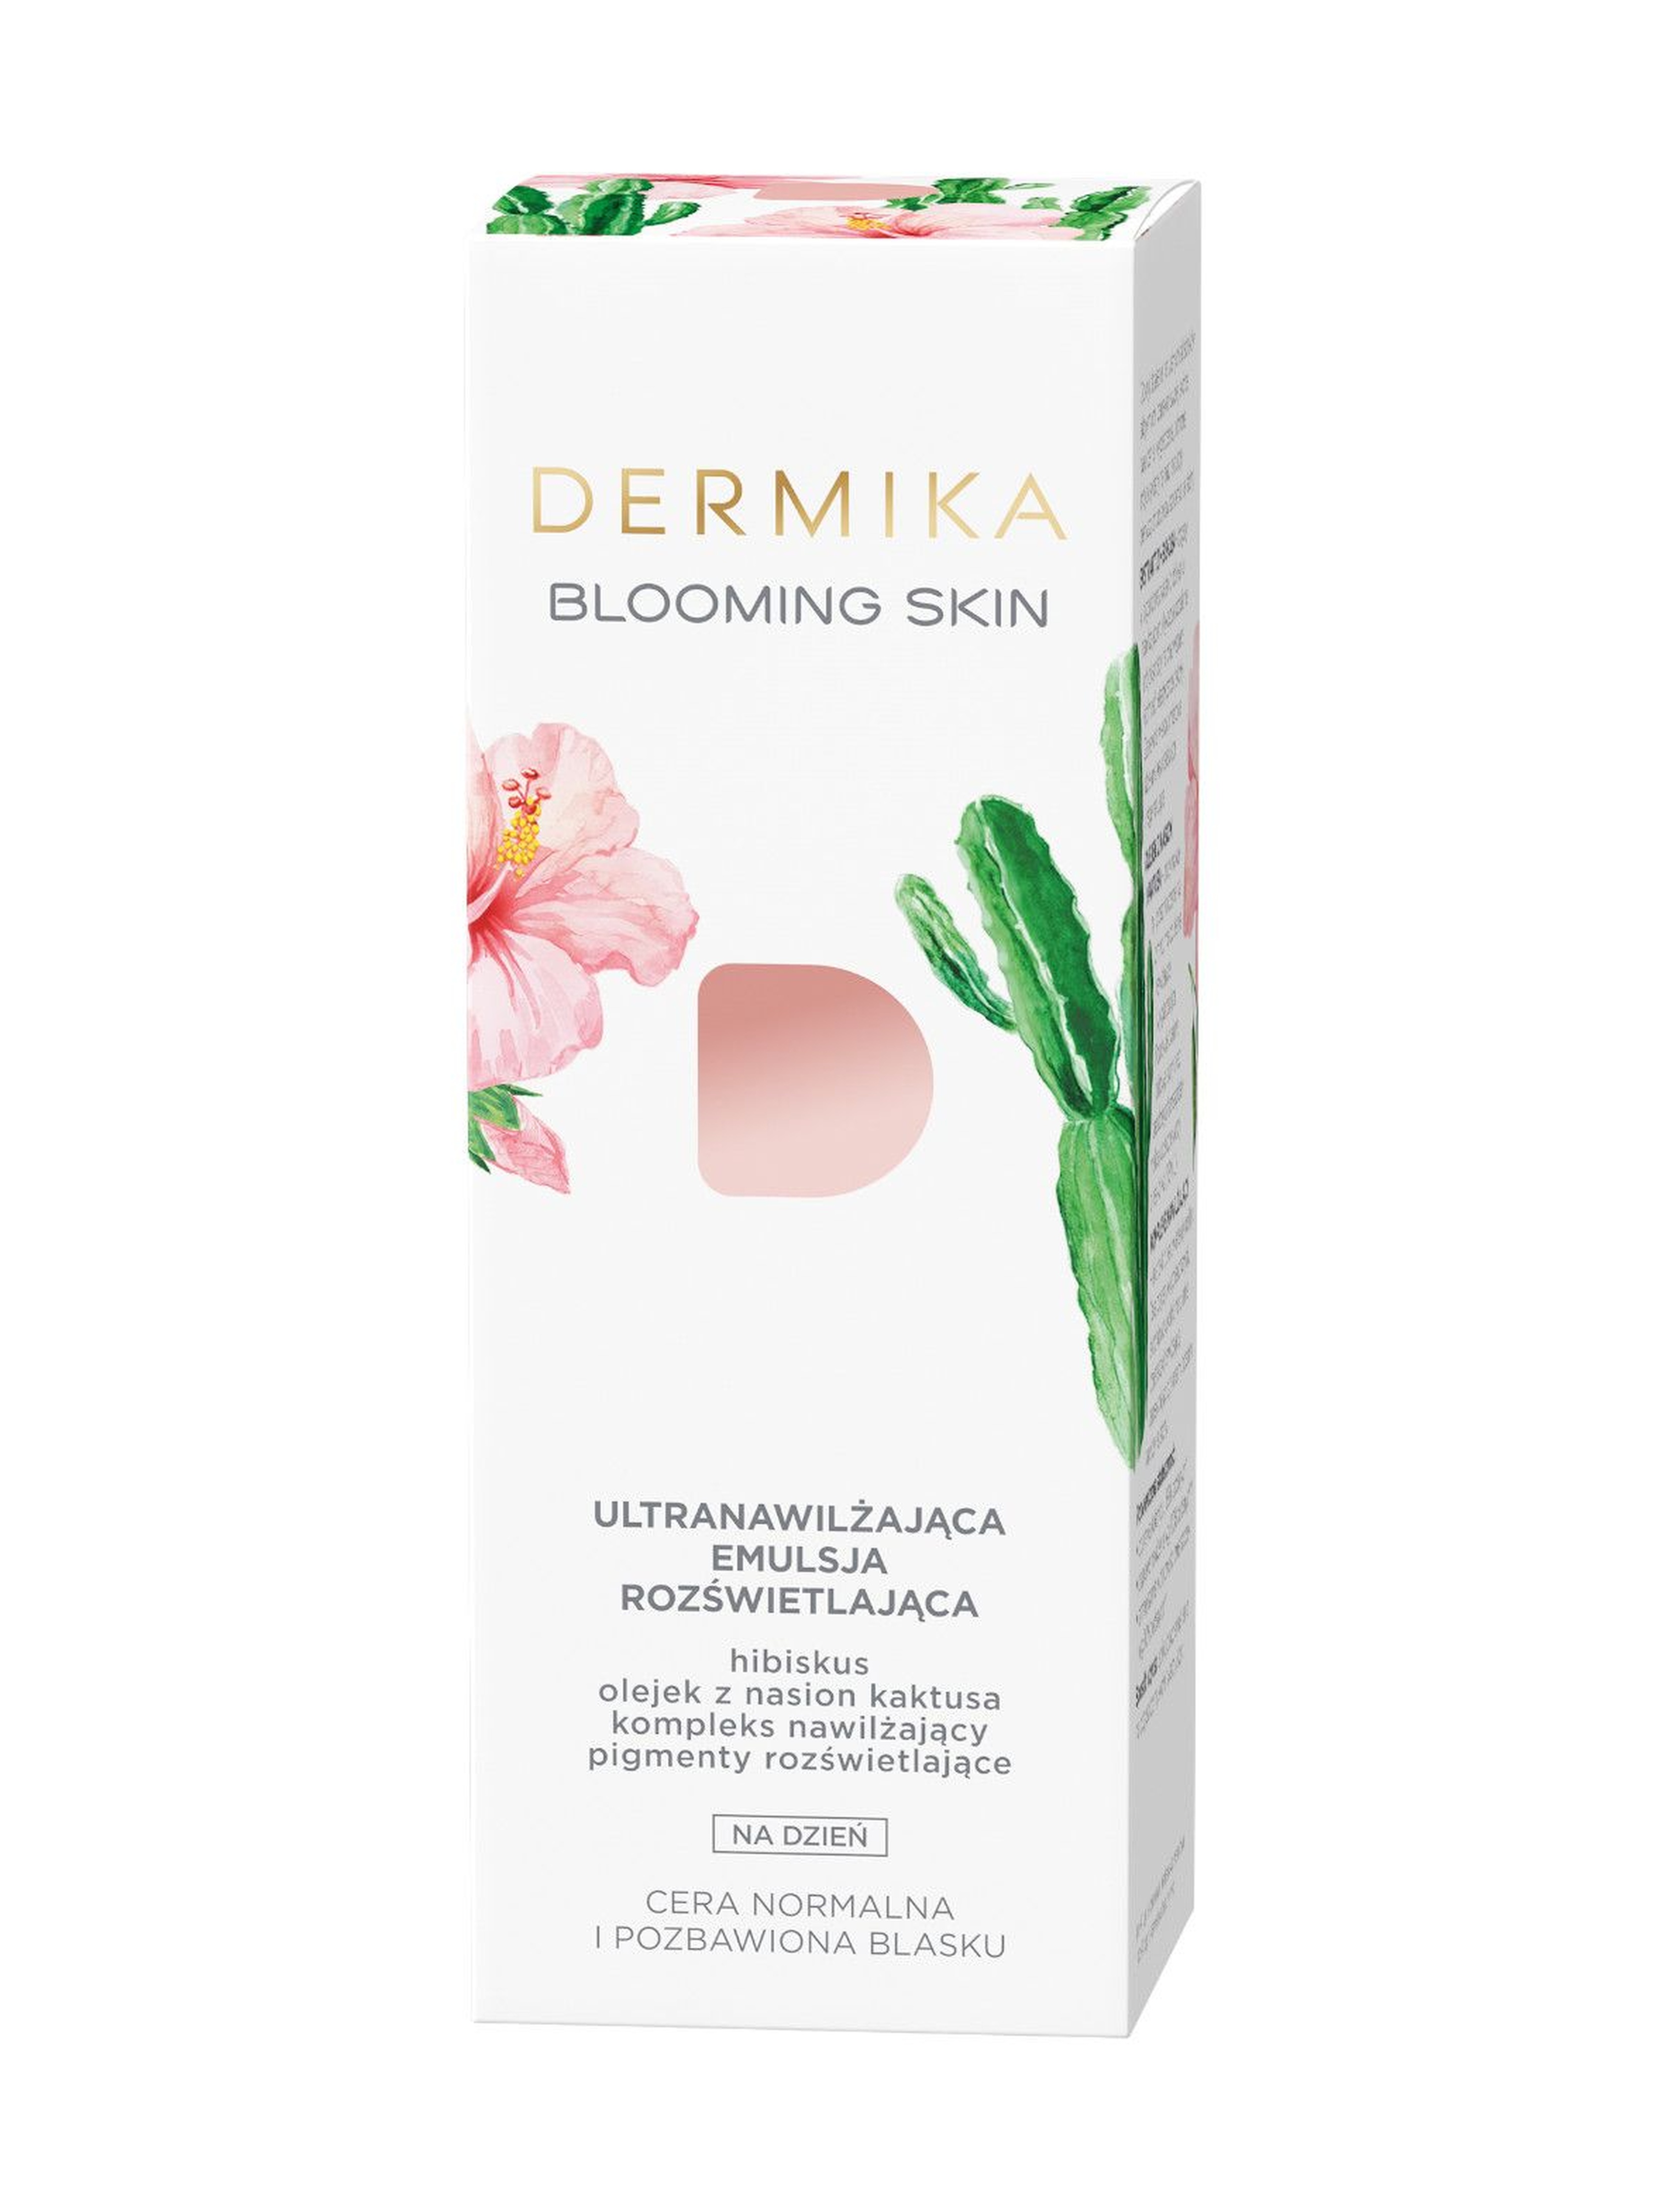 Dermika Blooming Skin emulsja na dzień  - 50 ml